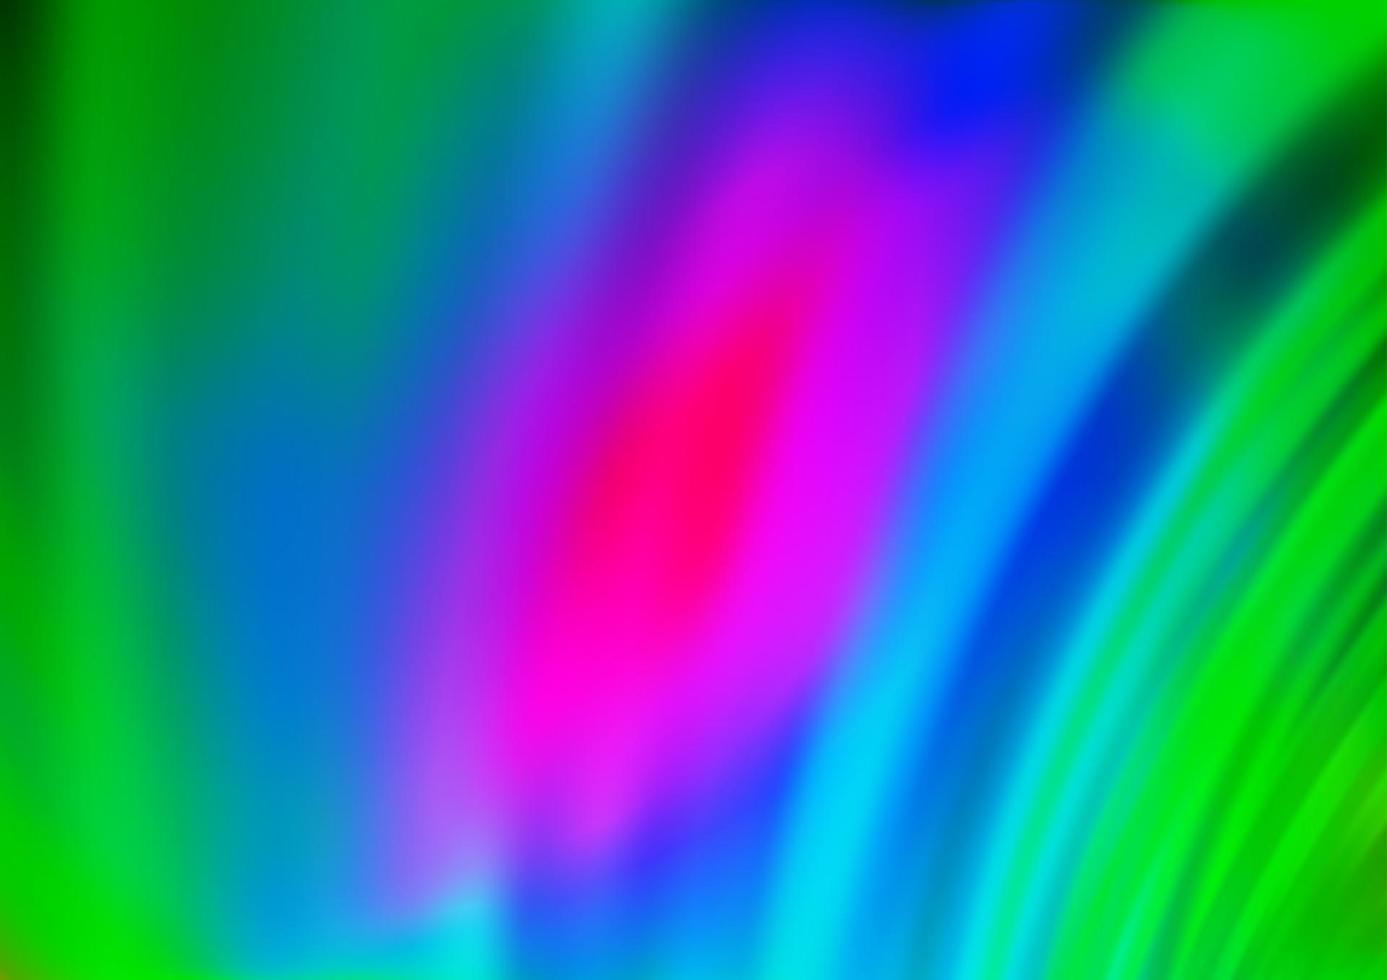 luz multicolor, fundo do vetor do arco-íris com círculos curvos.